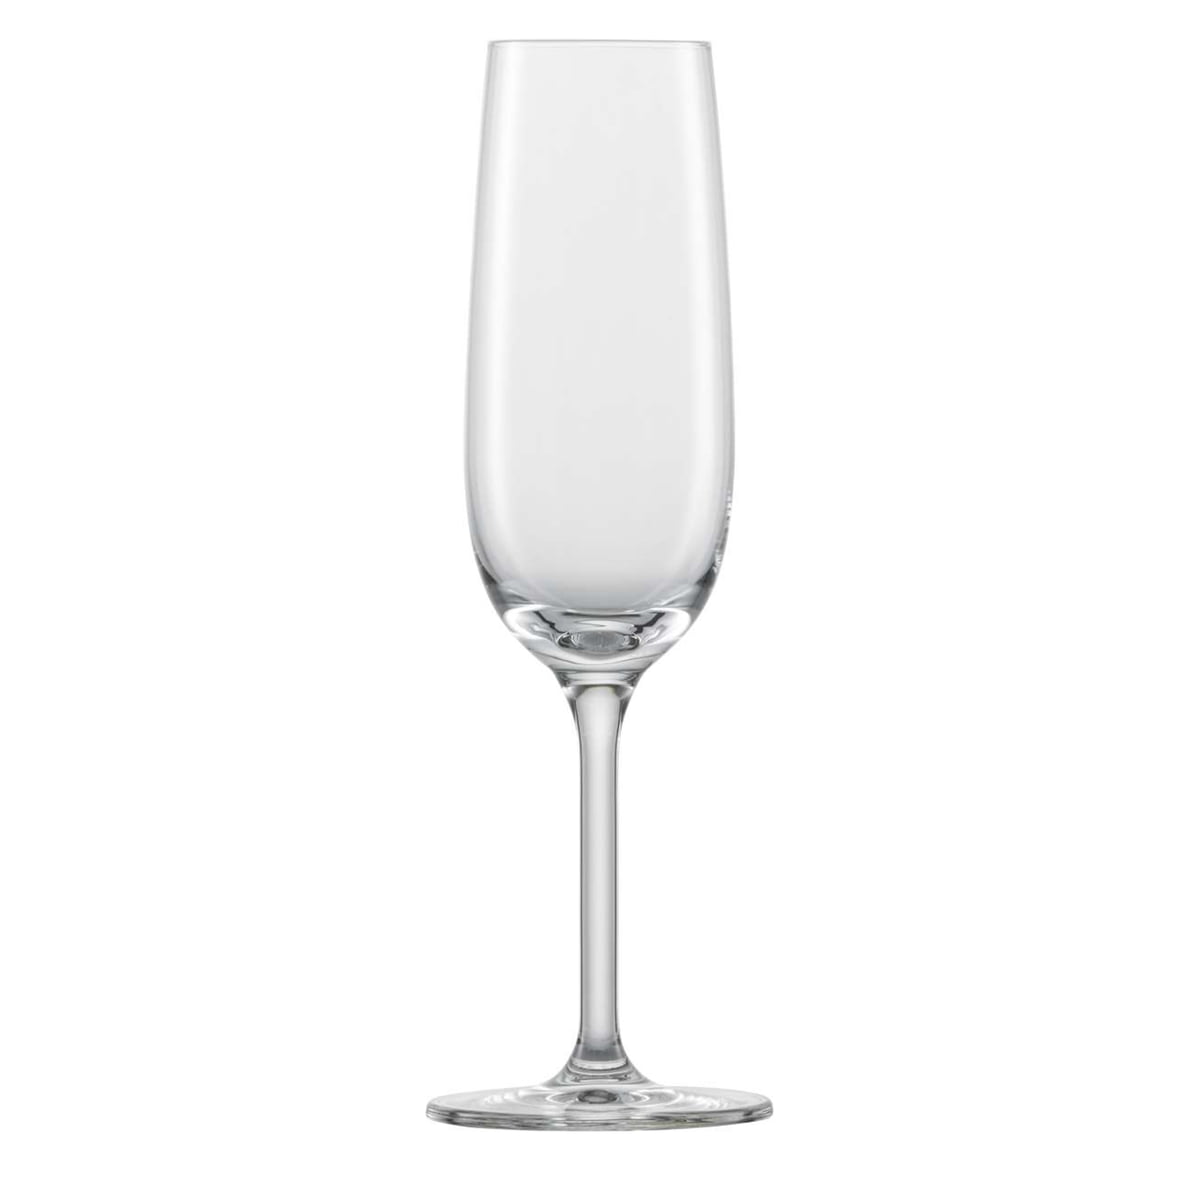 ik ga akkoord met Trechter webspin Vakman For You Sektglas / Champagnerglas-Set von Schott Zwiesel | Connox